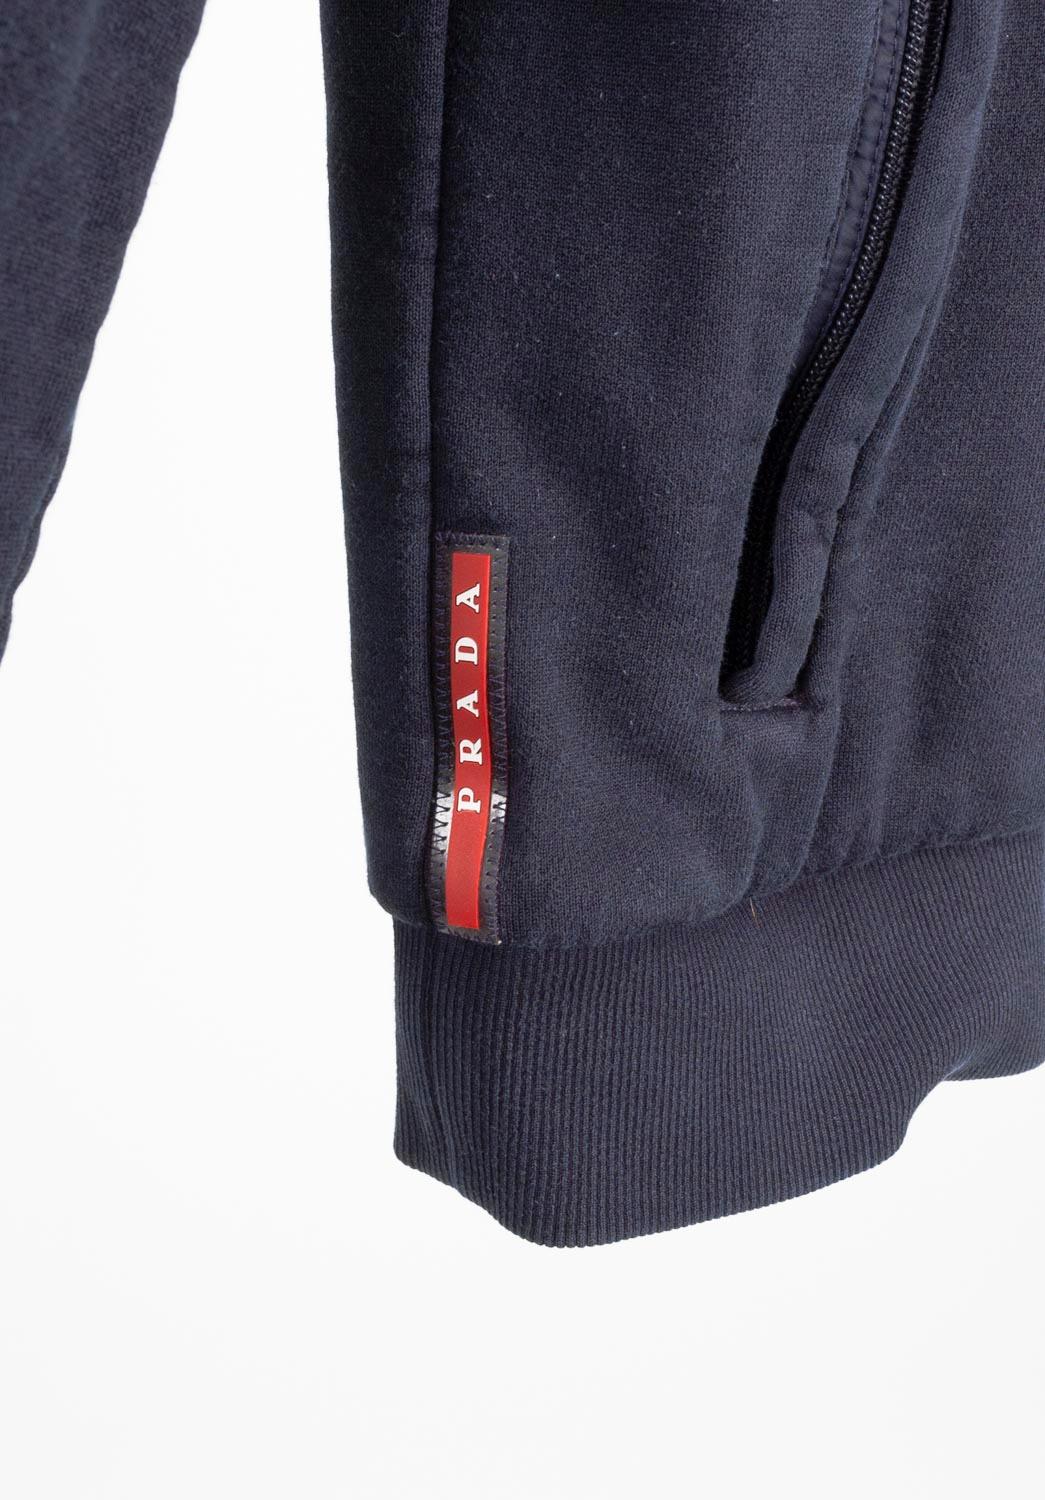  Prada Men Jacket Sweatshirt Light Zipped Hooded Size M, S662 For Sale 2